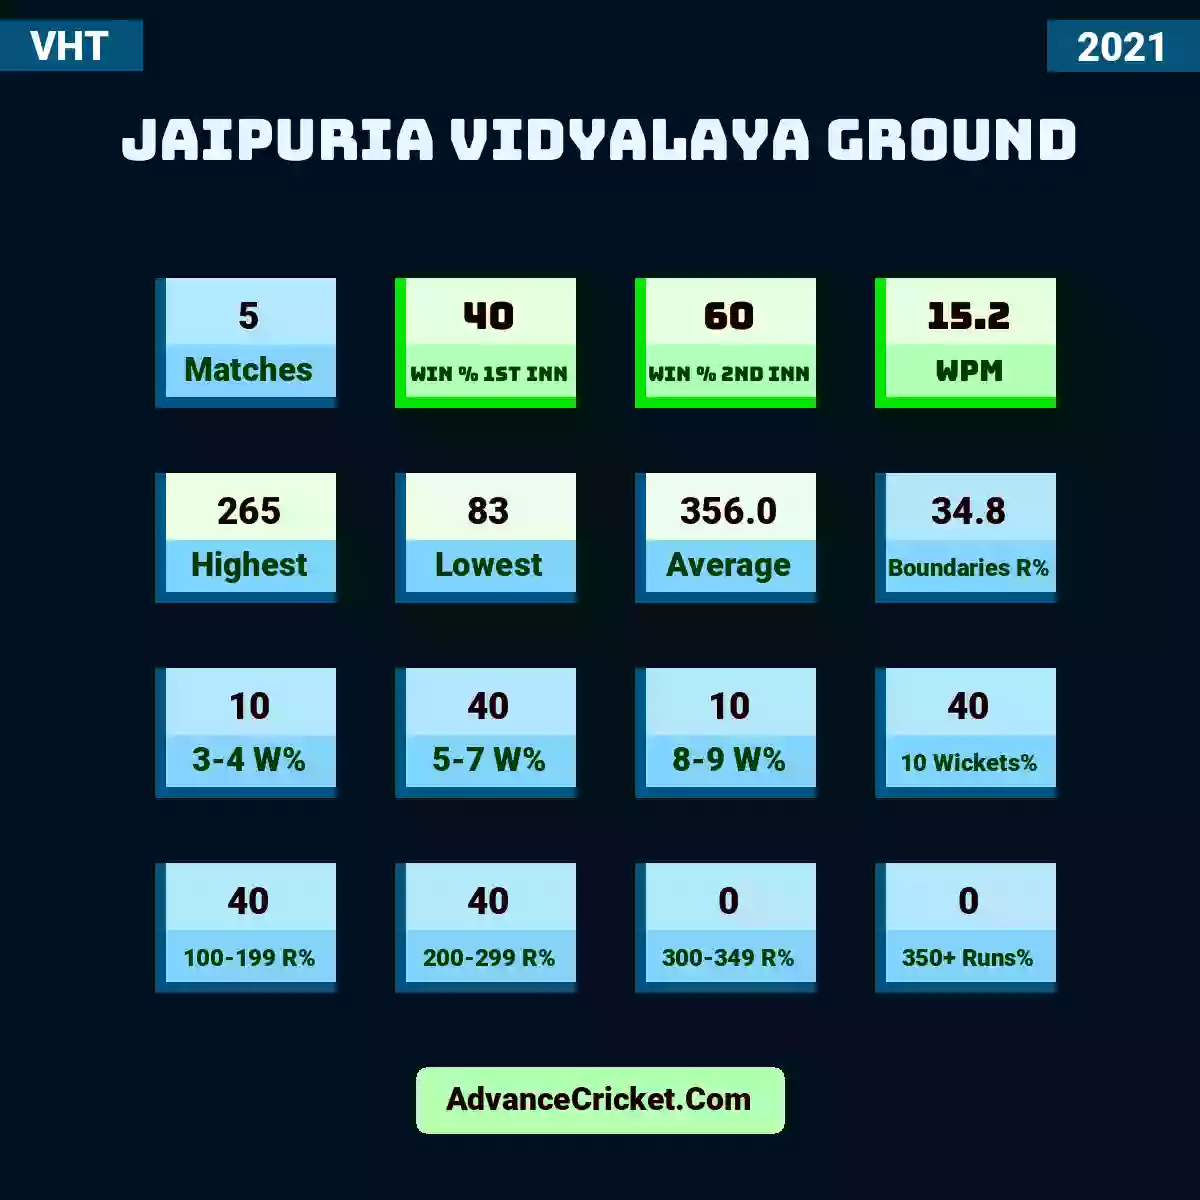 Image showing Jaipuria Vidyalaya Ground with Matches: 5, Win % 1st Inn: 40, Win % 2nd Inn: 60, WPM: 15.2, Highest: 265, Lowest: 83, Average: 356.0, Boundaries R%: 34.8, 3-4 W%: 10, 5-7 W%: 40, 8-9 W%: 10, 10 Wickets%: 40, 100-199 R%: 40, 200-299 R%: 40, 300-349 R%: 0, 350+ Runs%: 0.